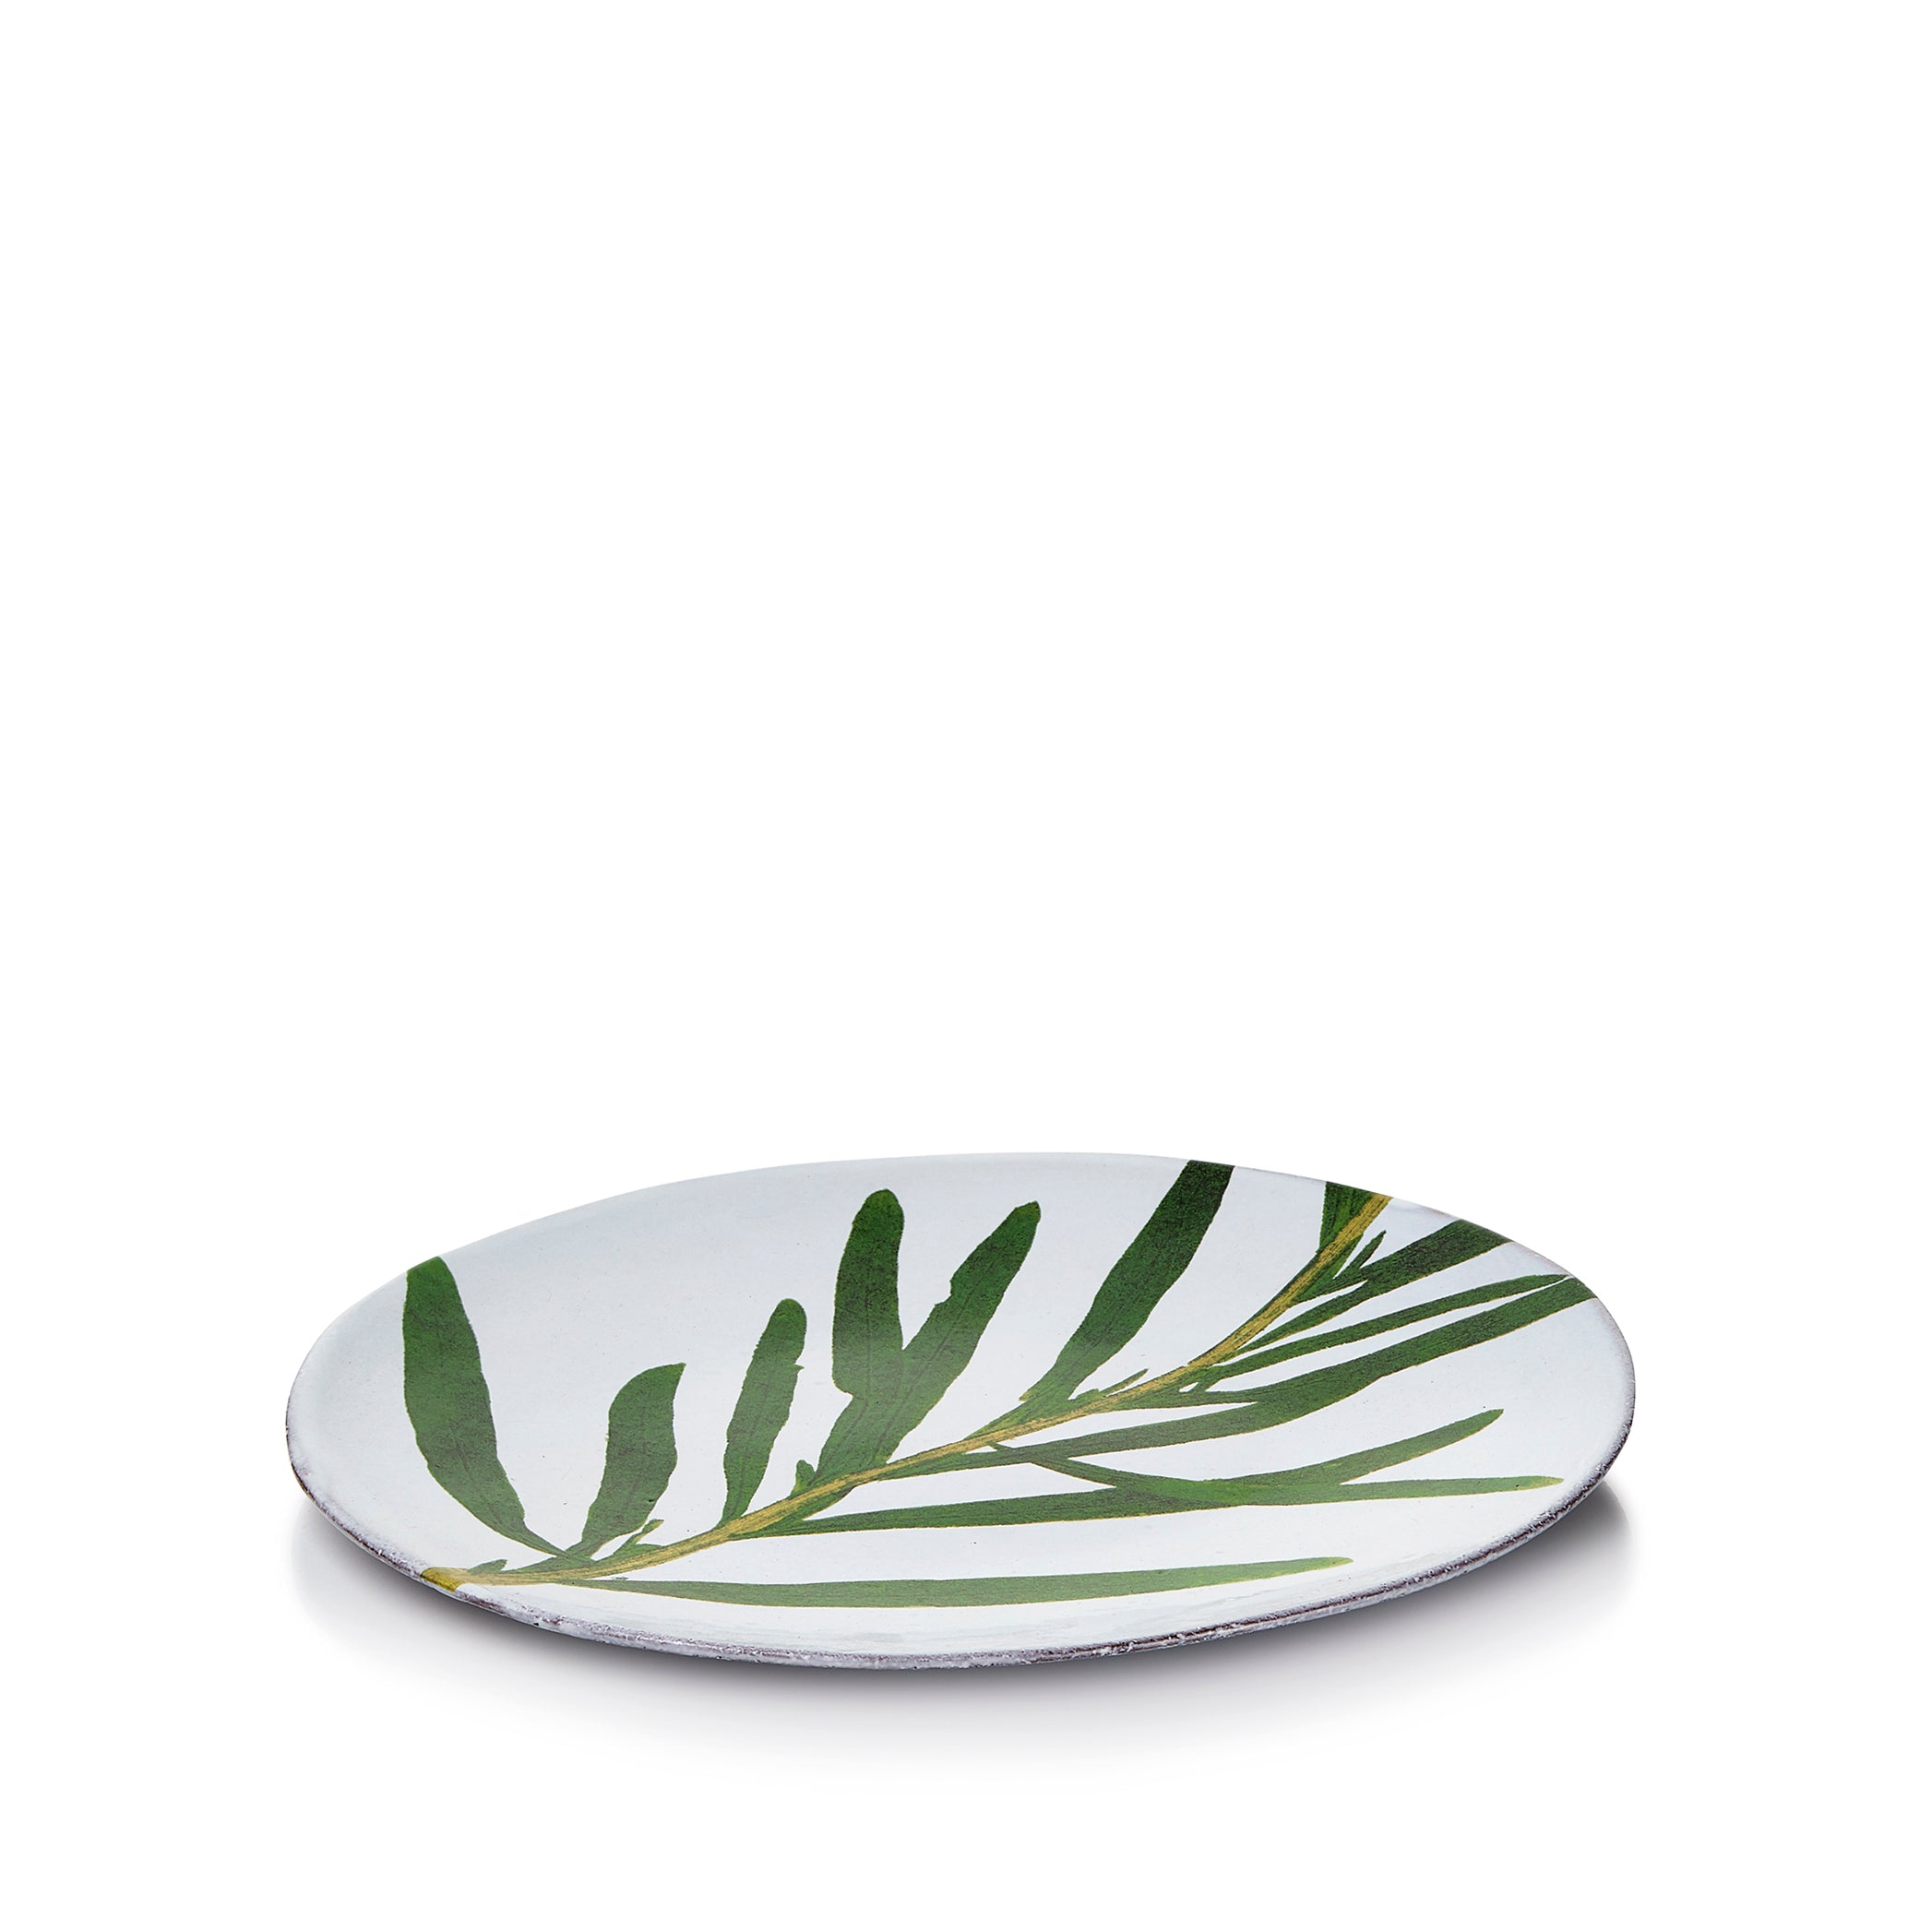 Reseda Leaf Plate by Astier de Villatte, 24cm